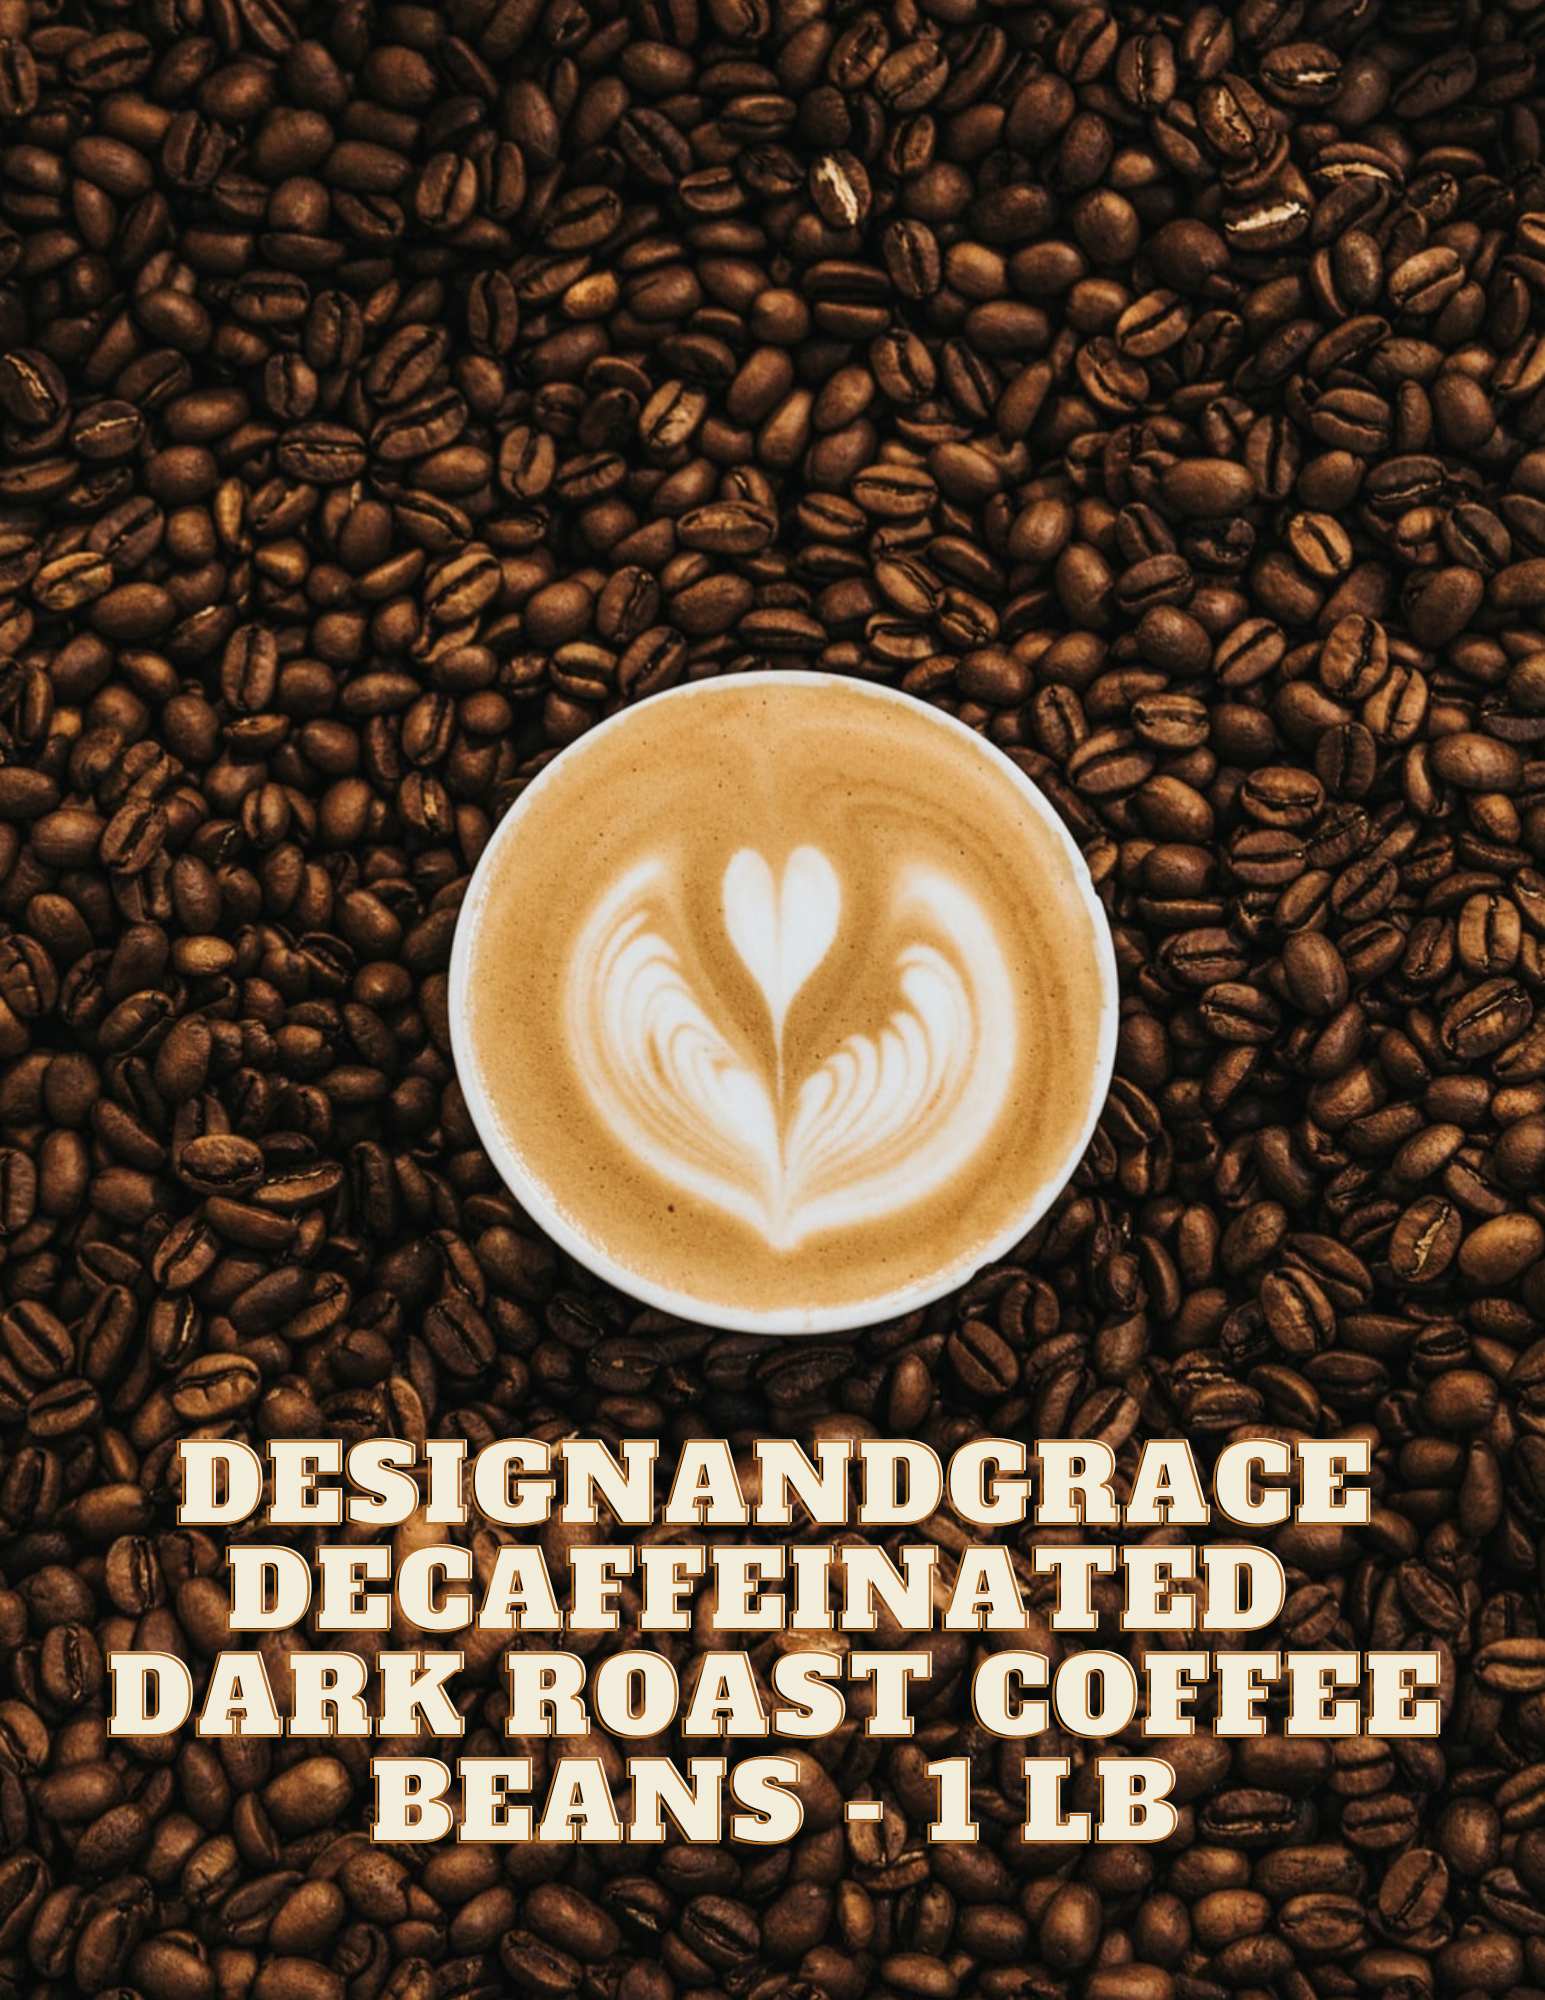 DesignandGrace Decaffeinated Dark Roast Coffee Beans - 1 lb